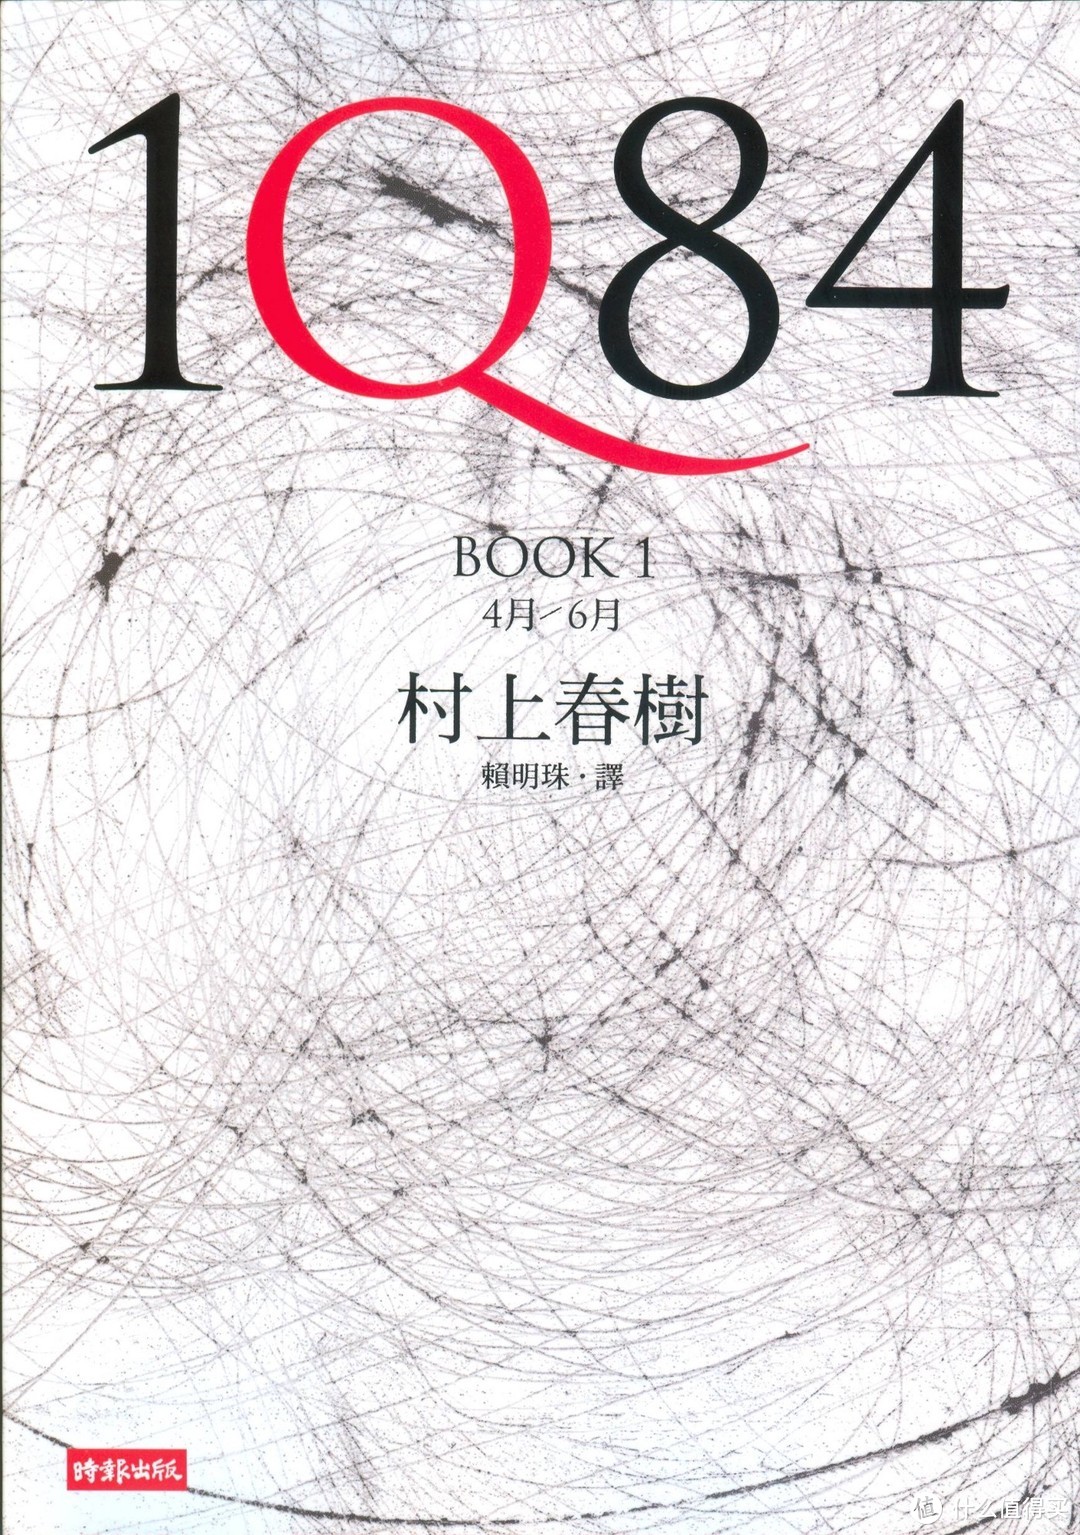 《1Q84 BOOK 1》：一部引人入胜的现代奇幻小说